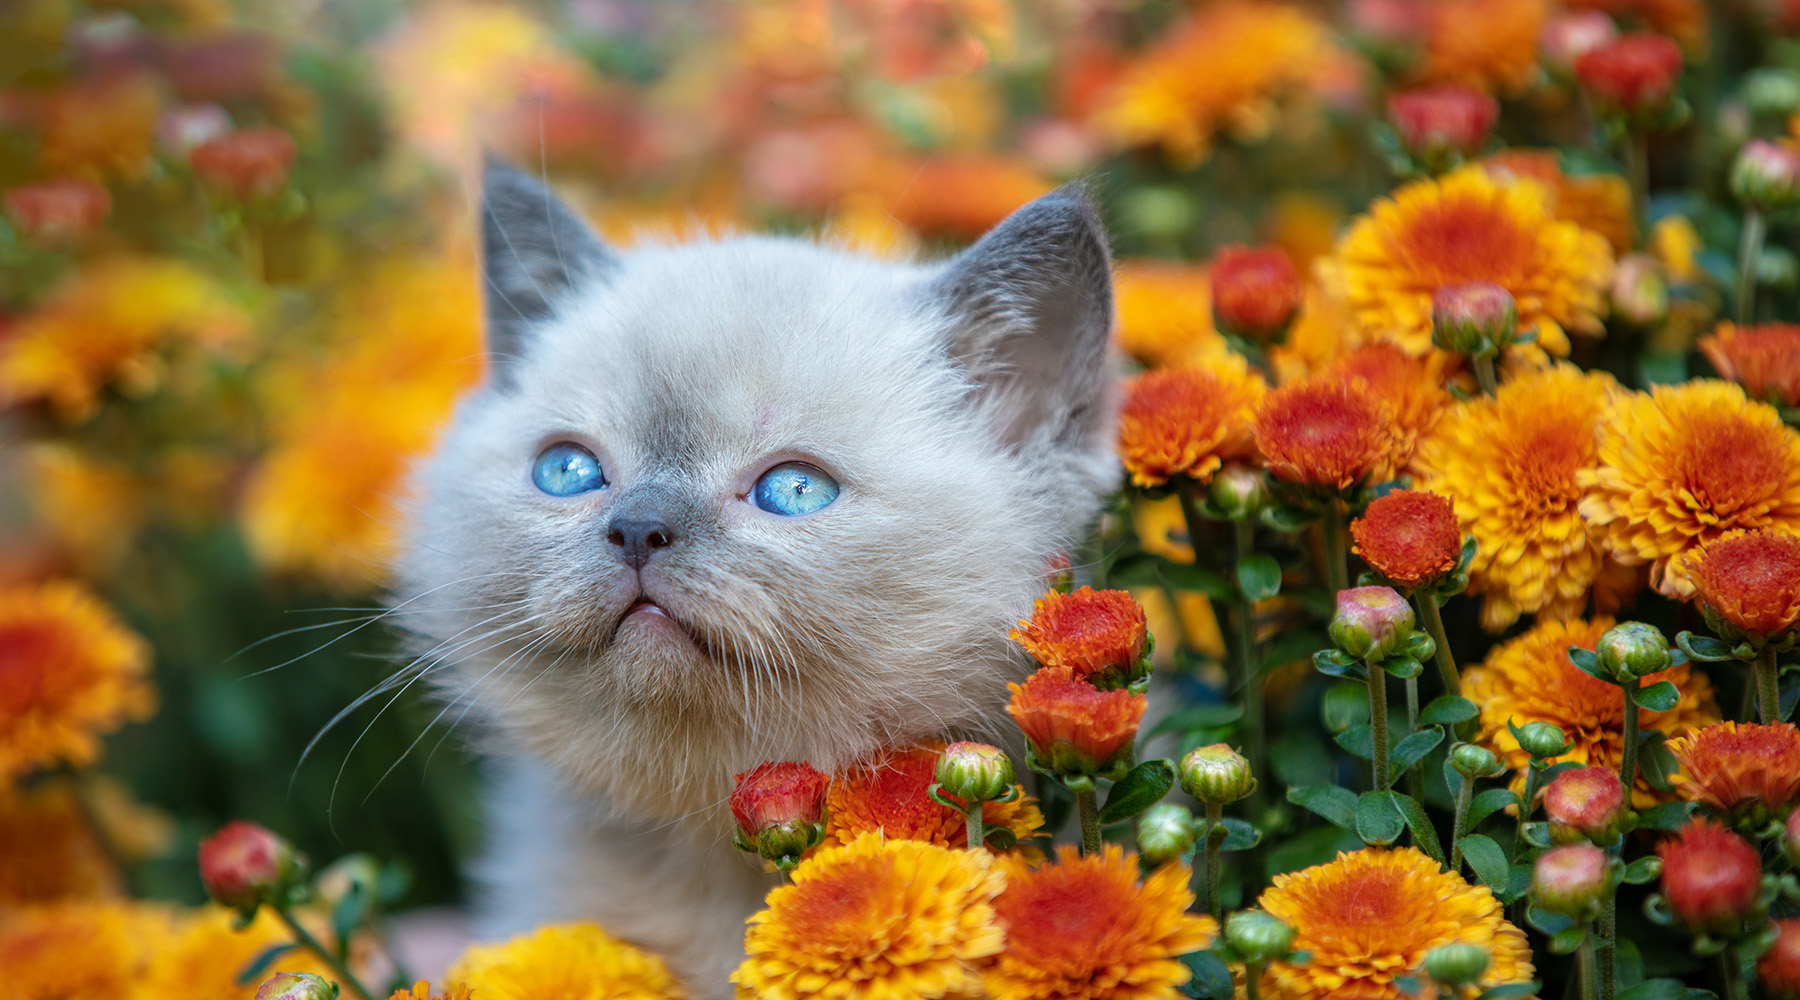 Cat on flowers 